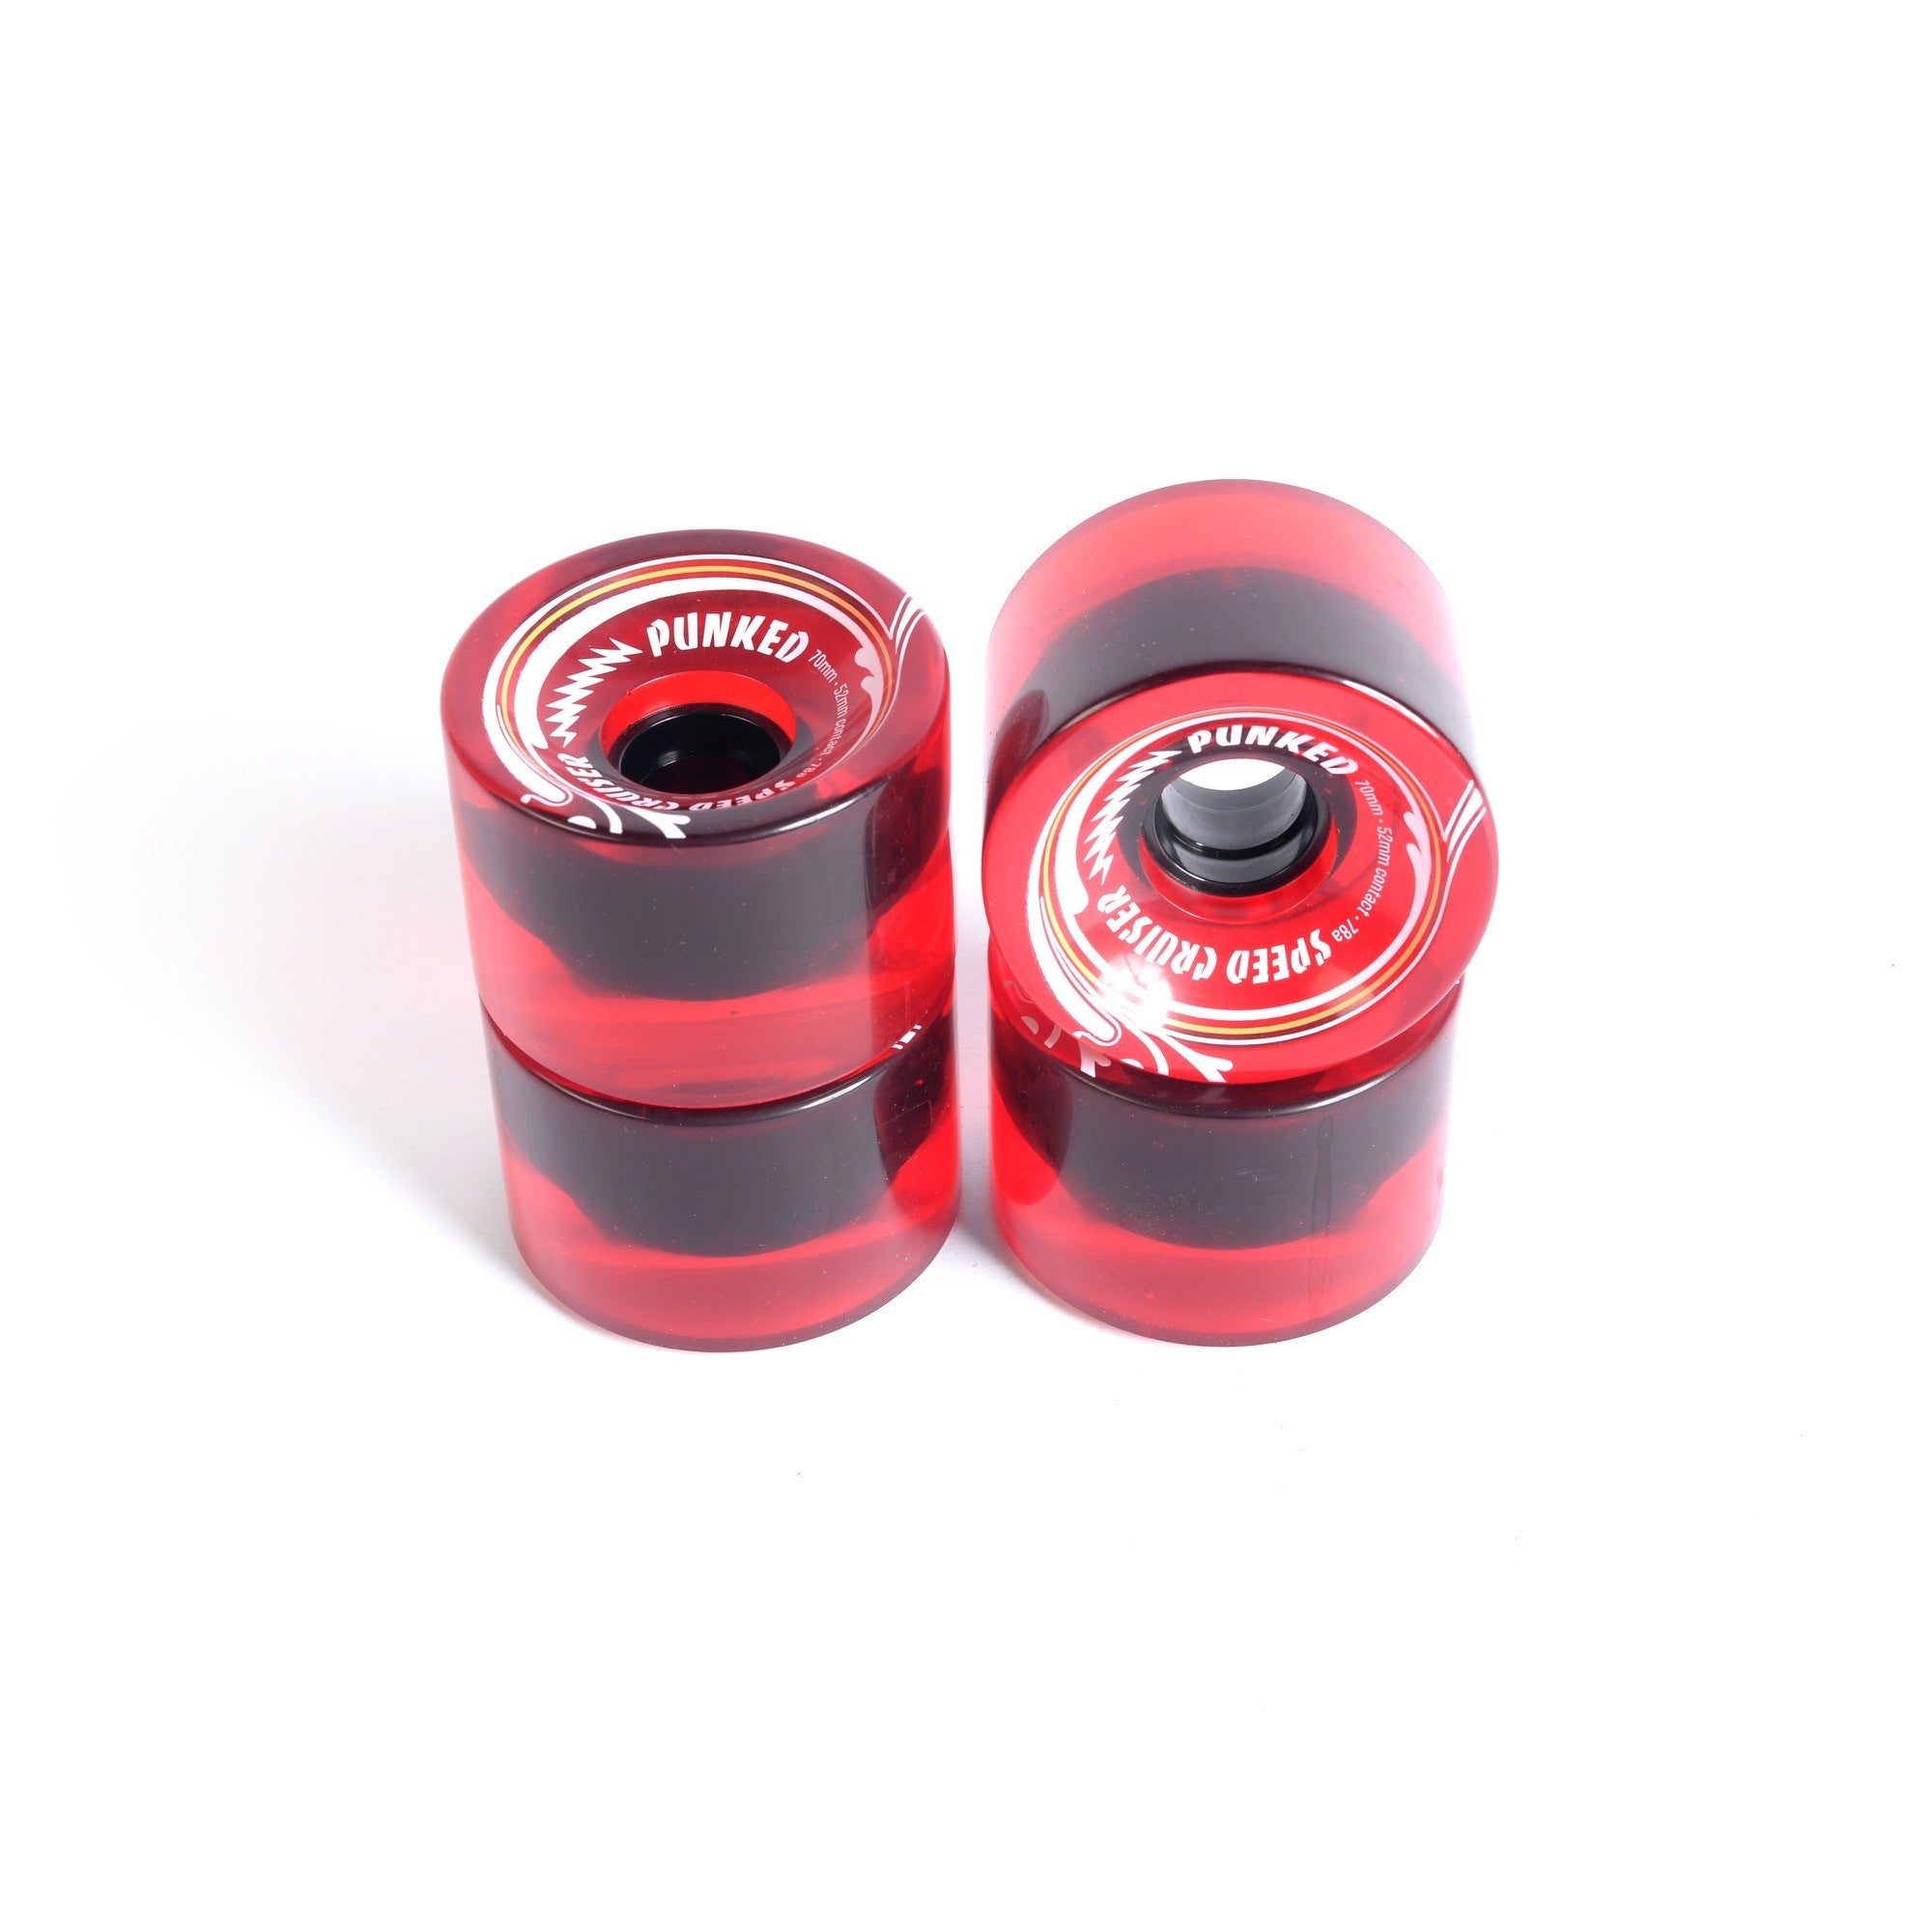 Skateboard wheels - YOCAHER 70x52mm 78a - Translucid Red